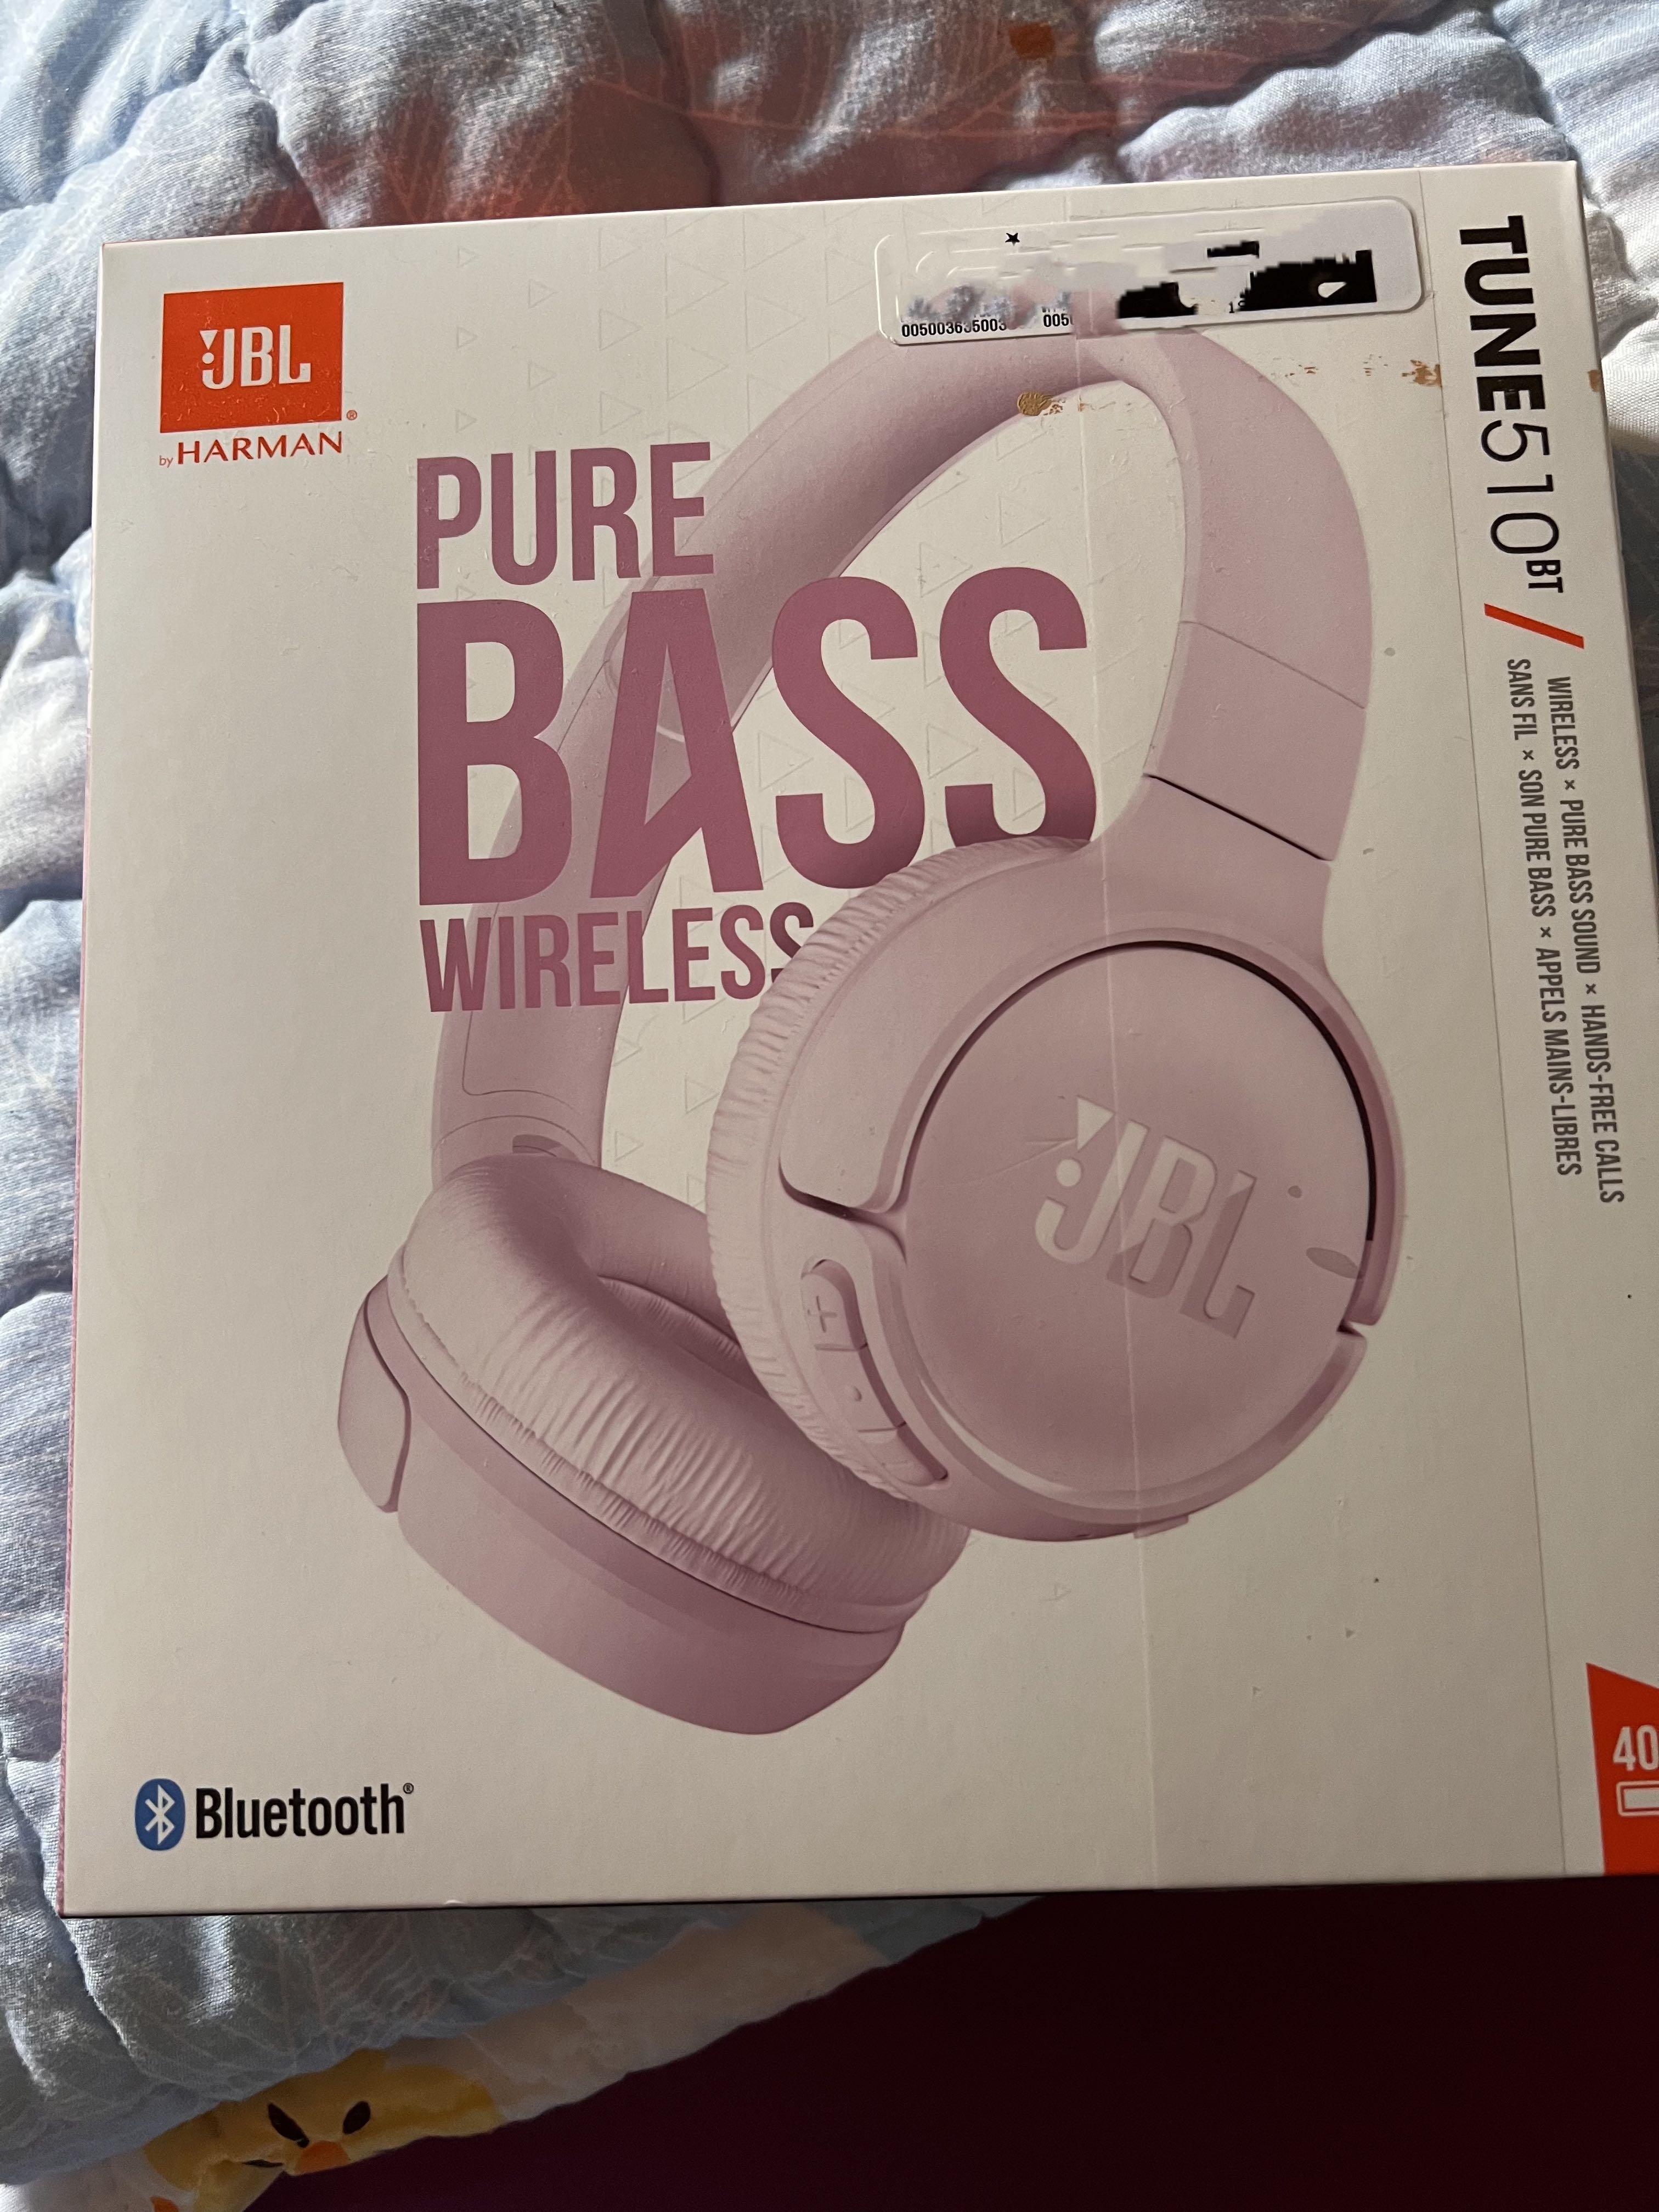 JBL Tune 510BT Bluetooth On-Ear Headphones with Purebass Sound - Rose